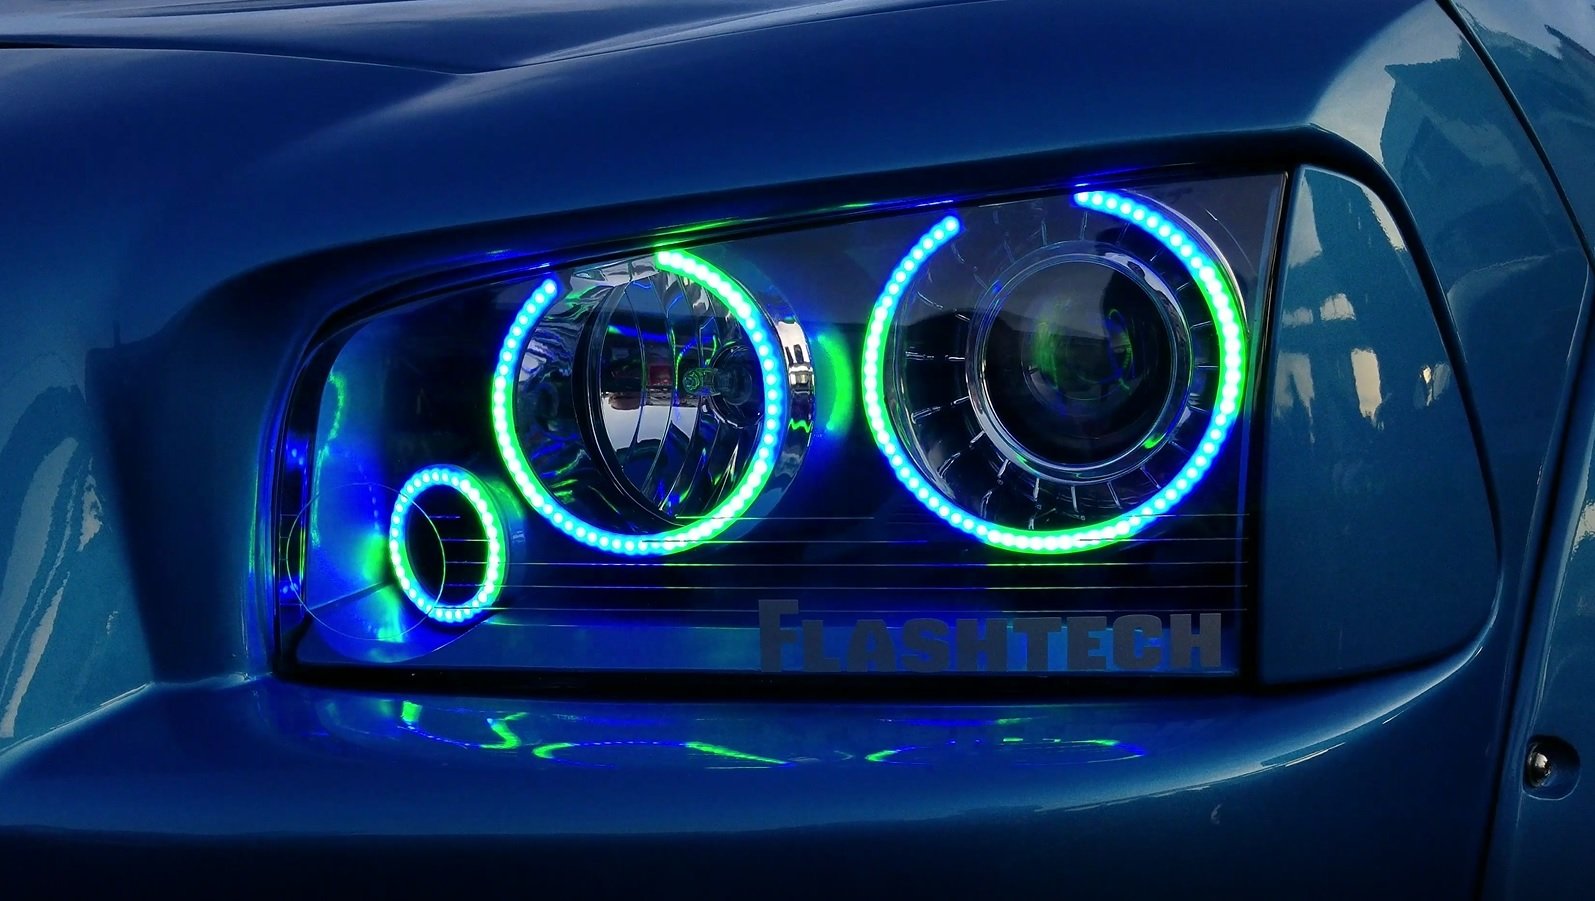 Ford-Fusion-2013, 2014, 2015, 2016-LED-Halo-Headlights-ColorChase-No Remote-FO-FU1316-CCH